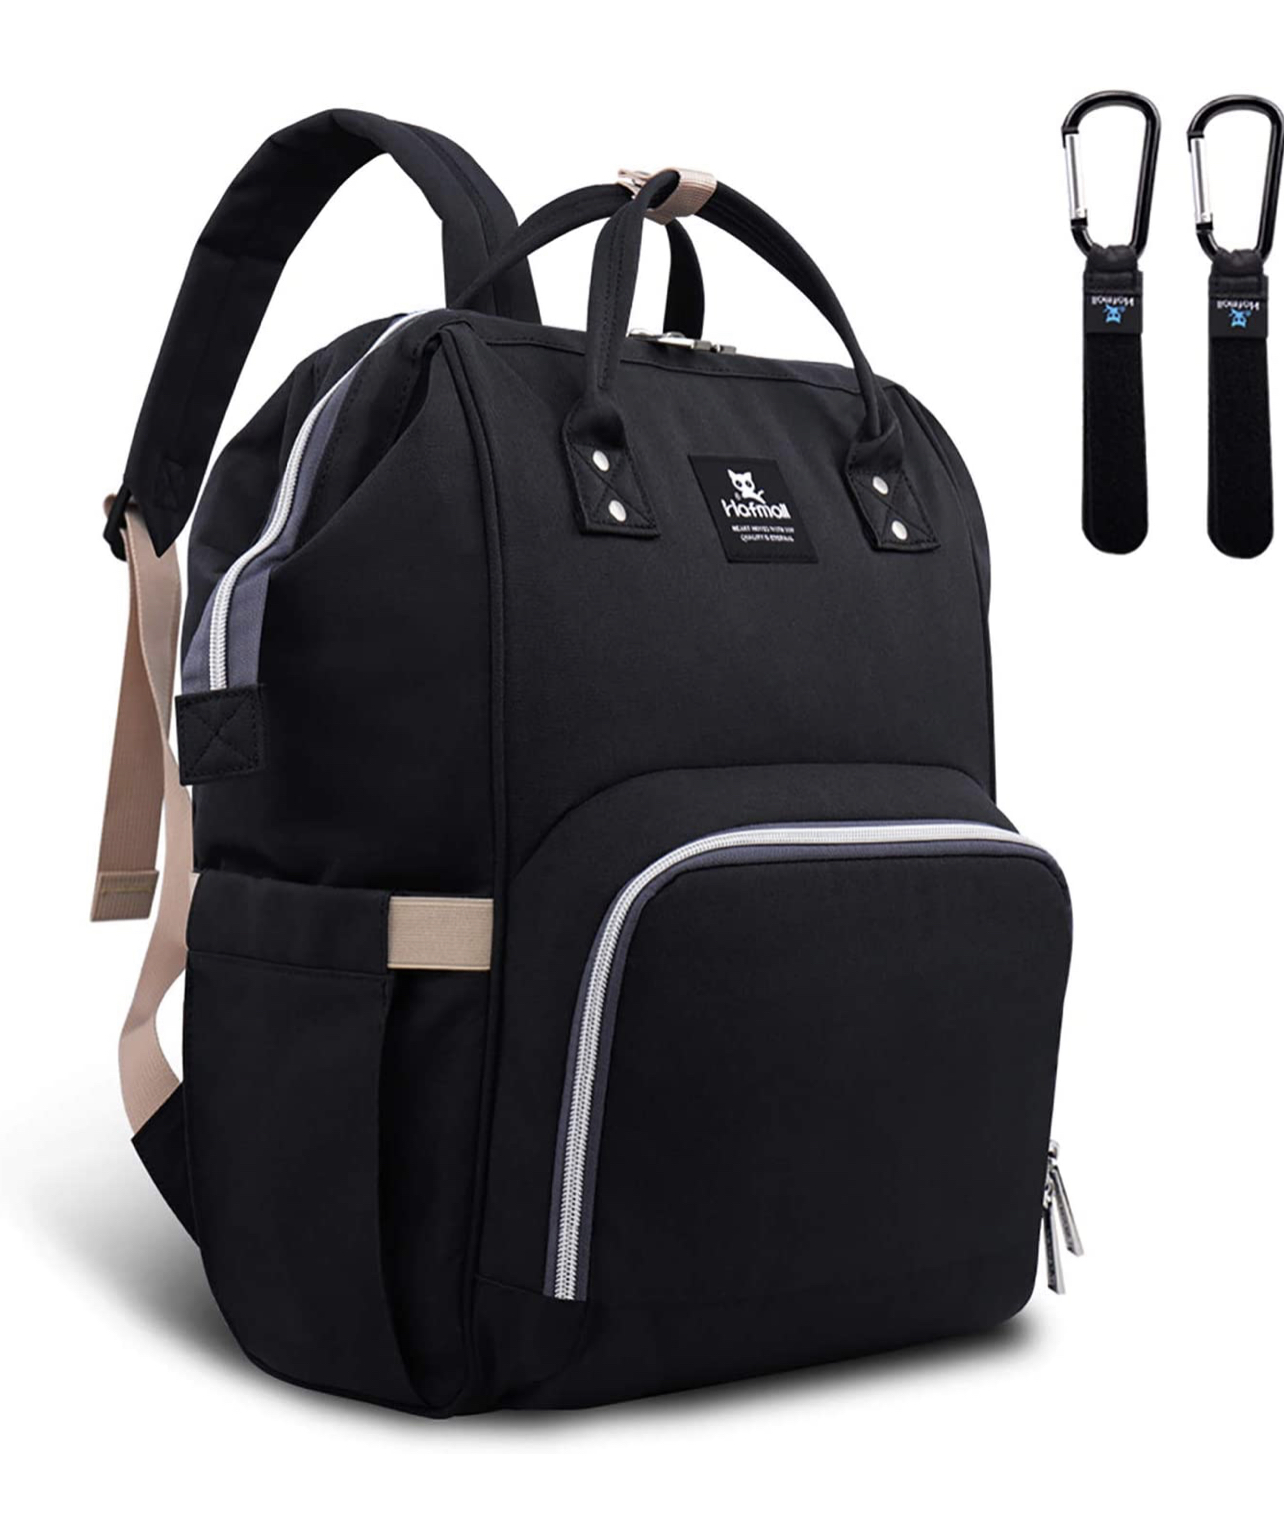 Hafmall Diaper Bag Backpack (Black) - Earlyyears ecommerce website